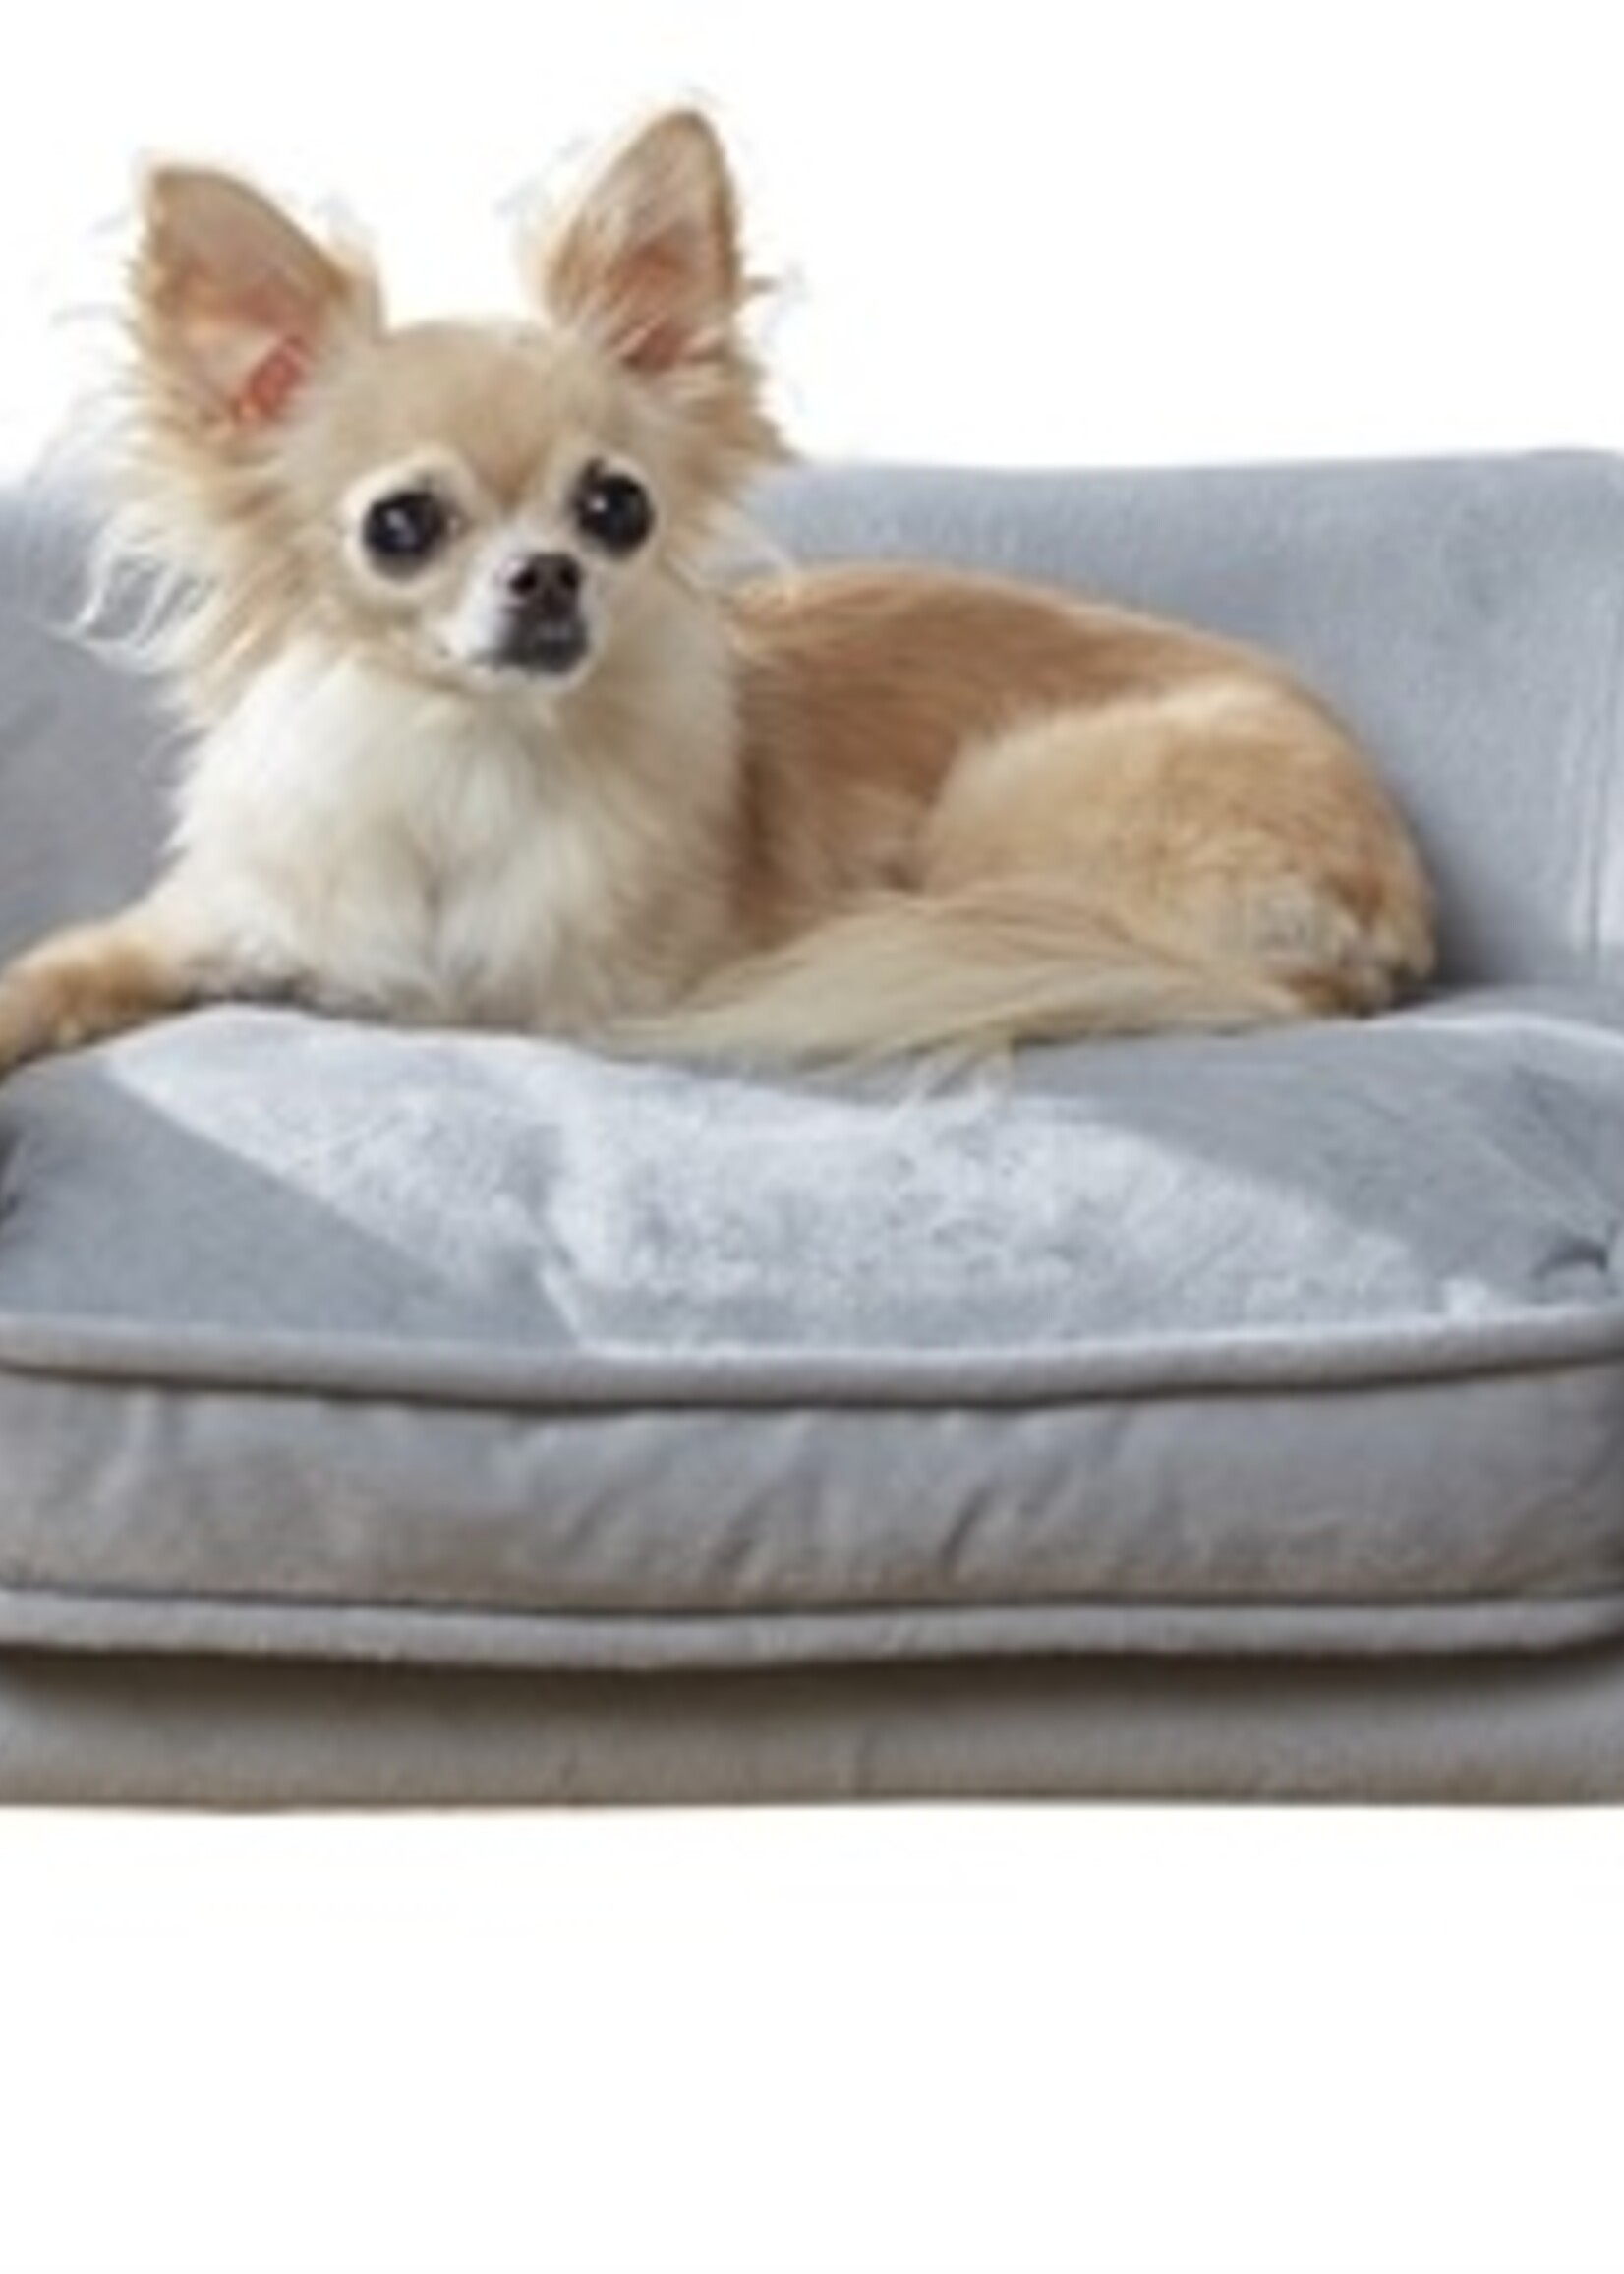 Enchanted pet Enchanted hondenmand / sofa romy grijs